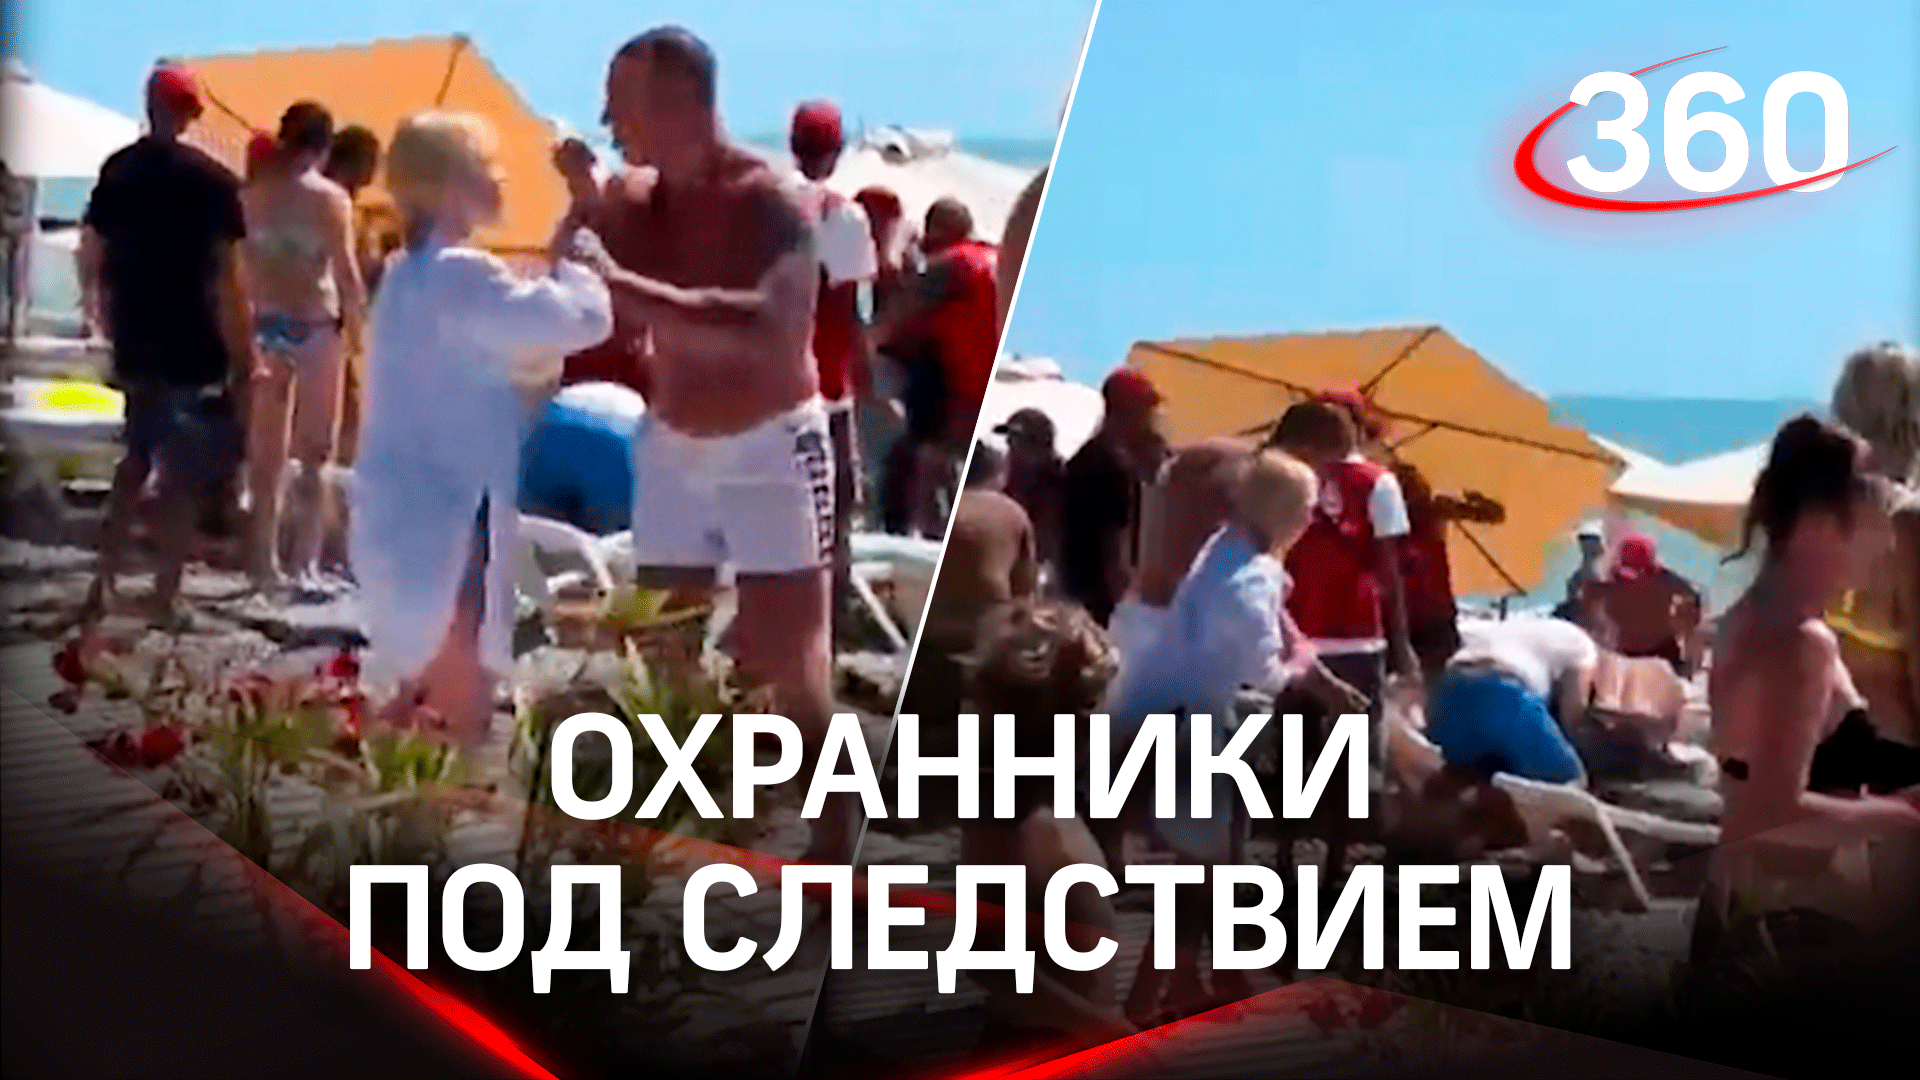 Самбиста избили охранники на пляже в Сочи - они под следствием. Турист в реанимации. Видео драки